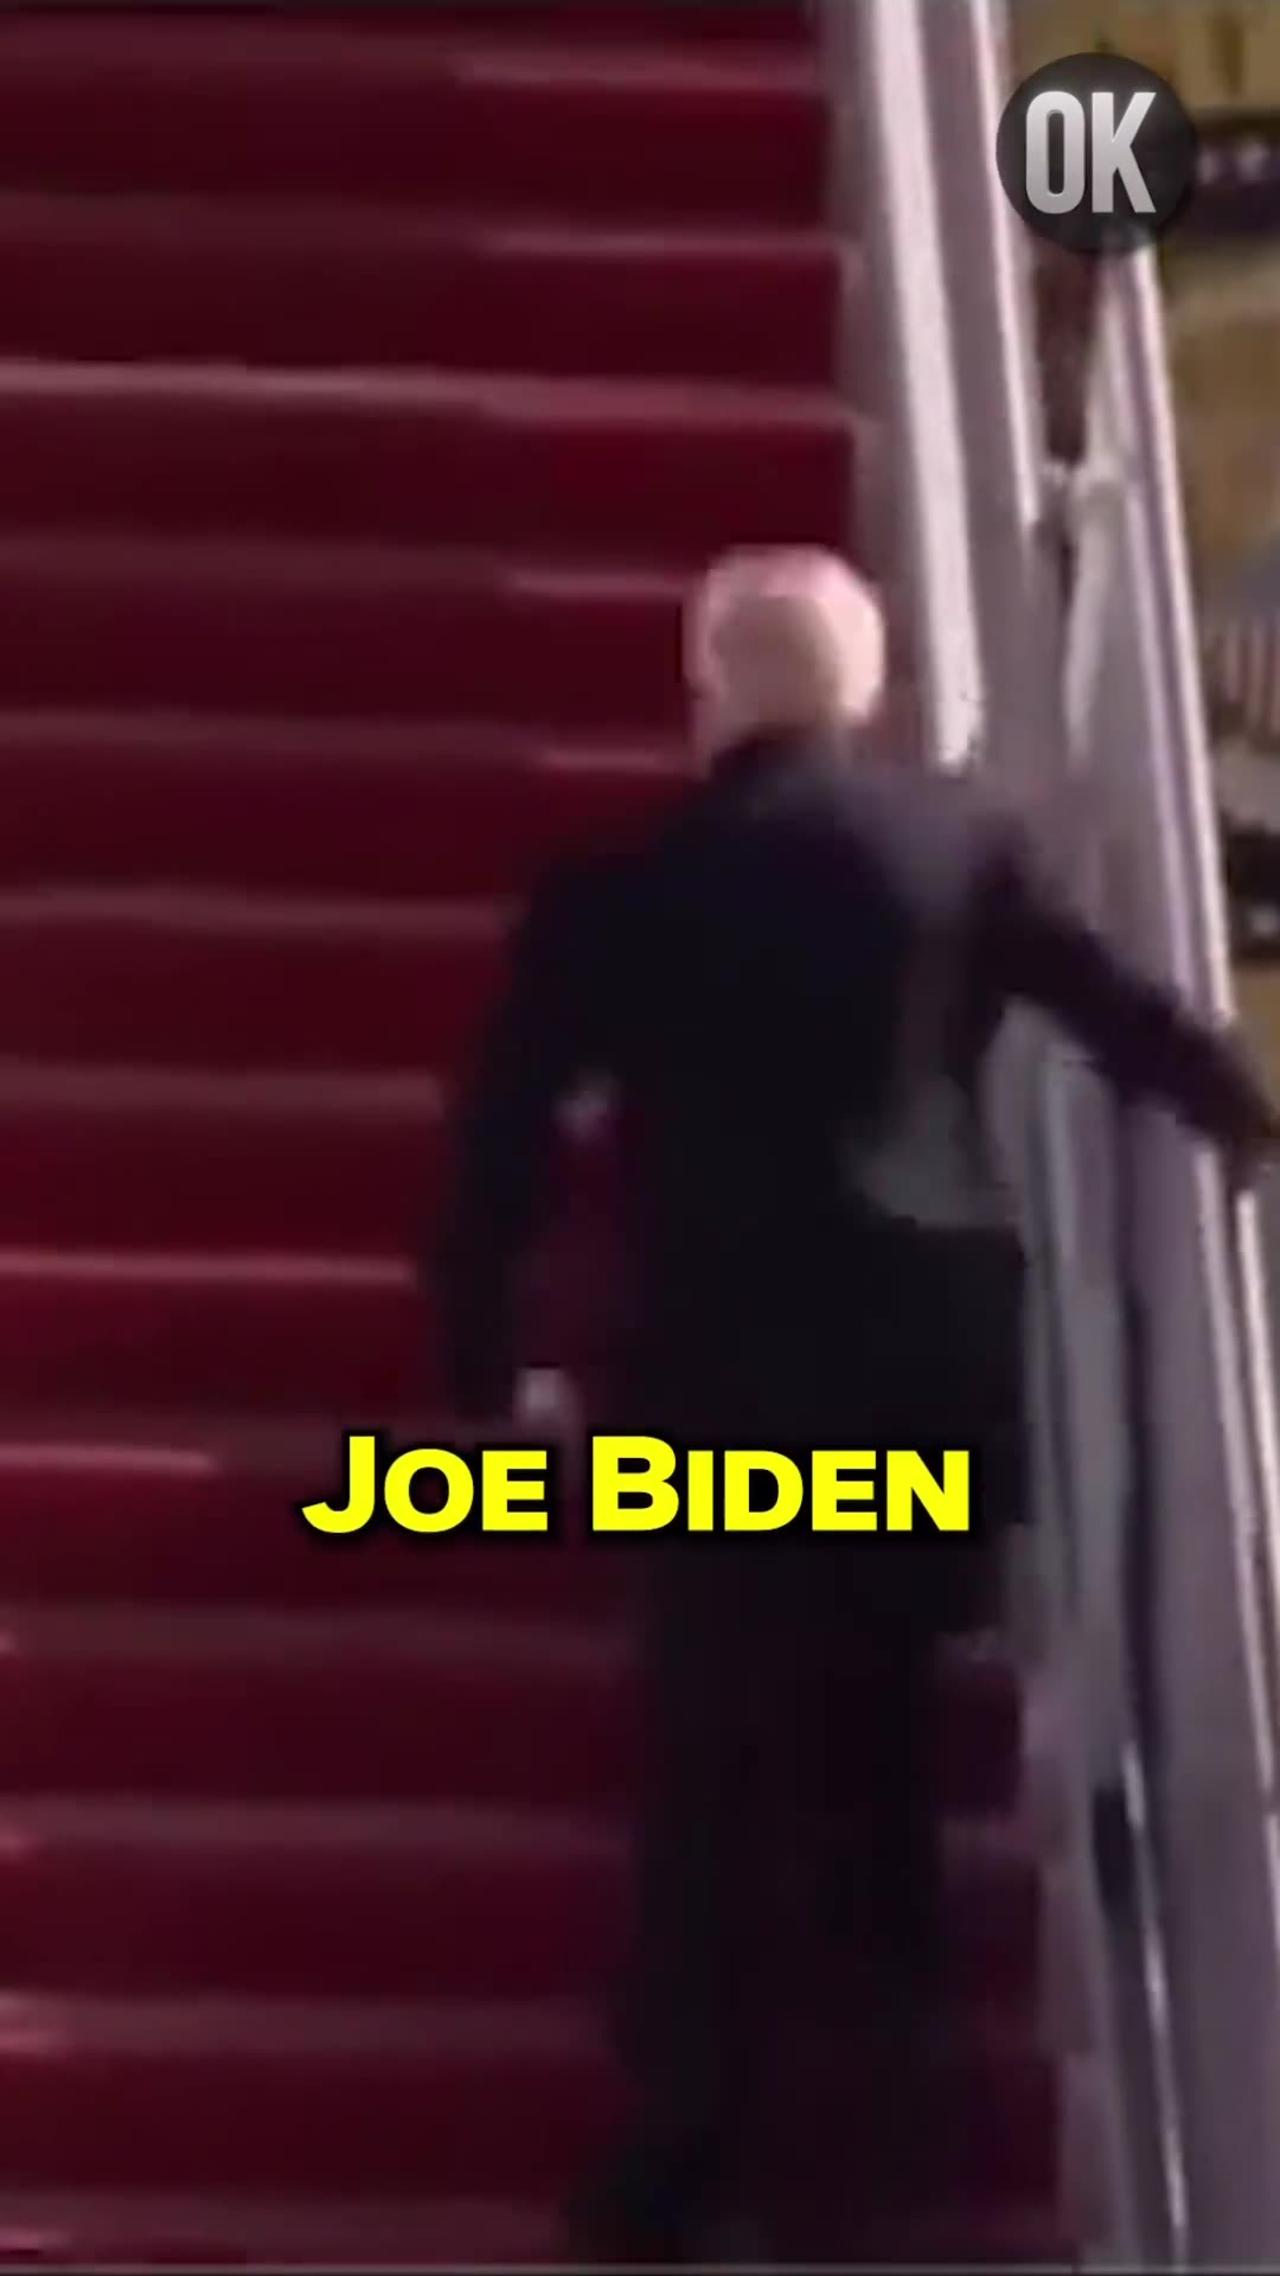 Joe Biden Is A Total Embarrassment To The World